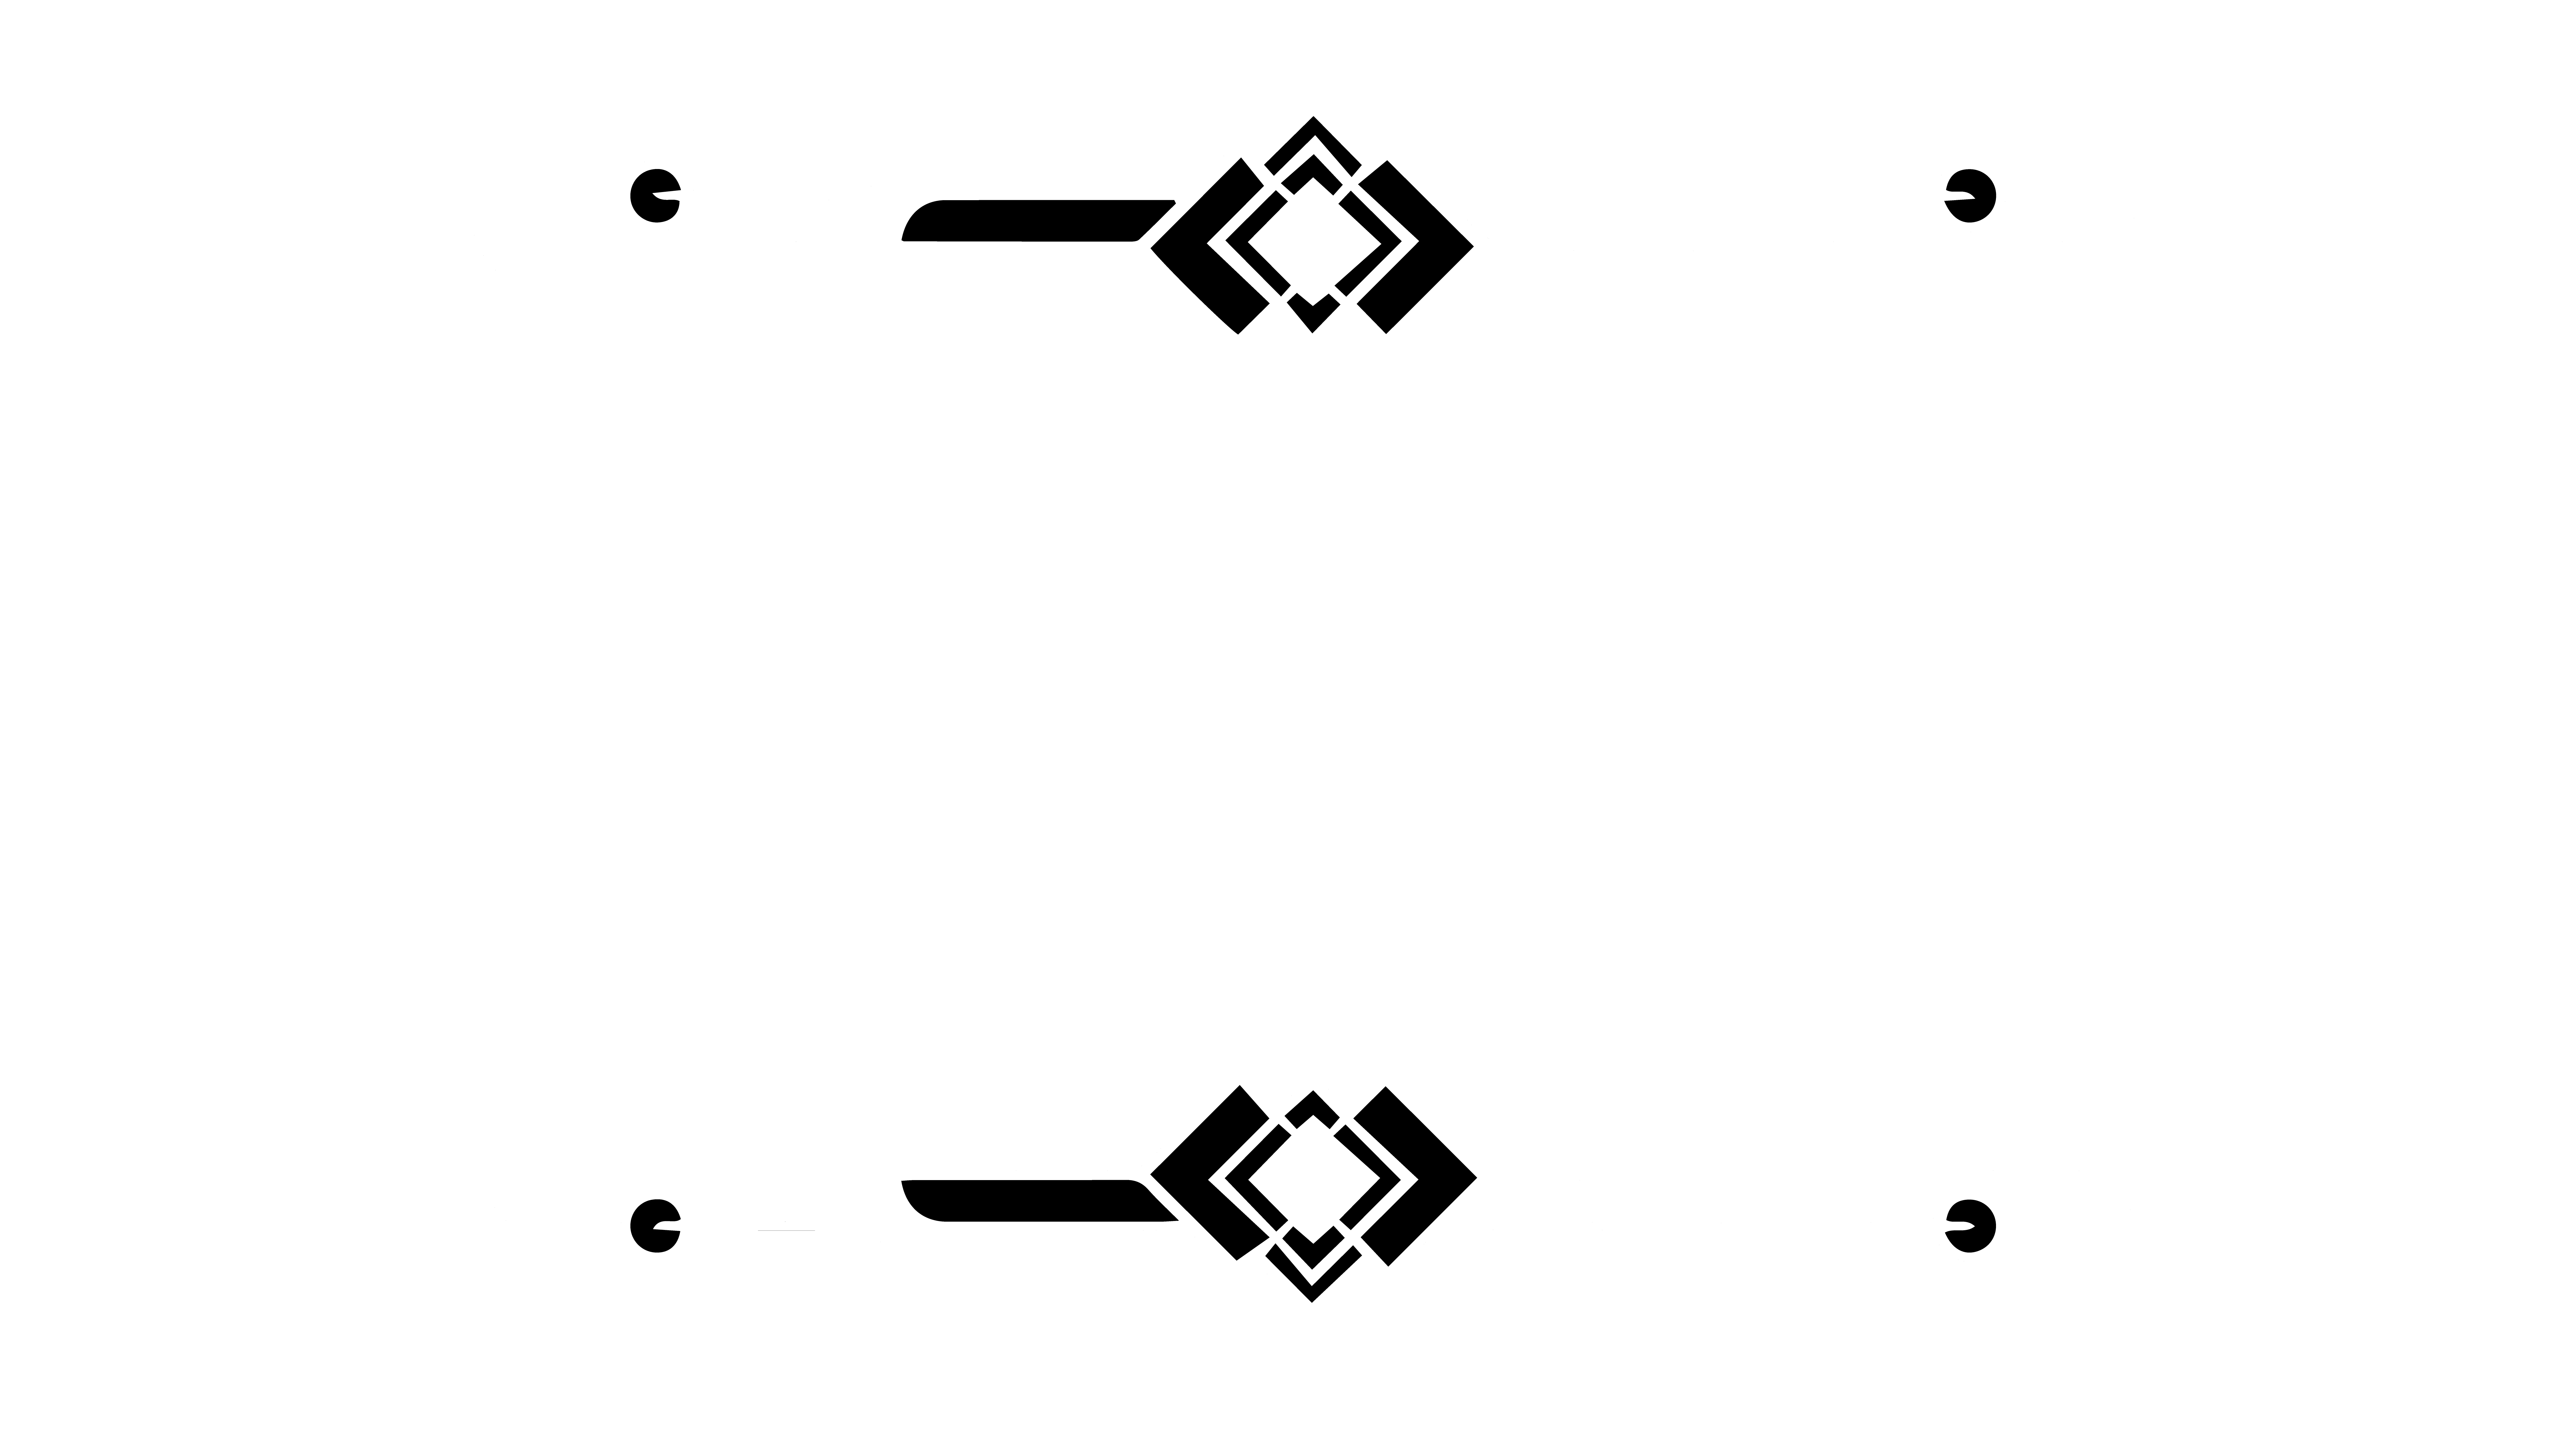 Rosauers Reserve